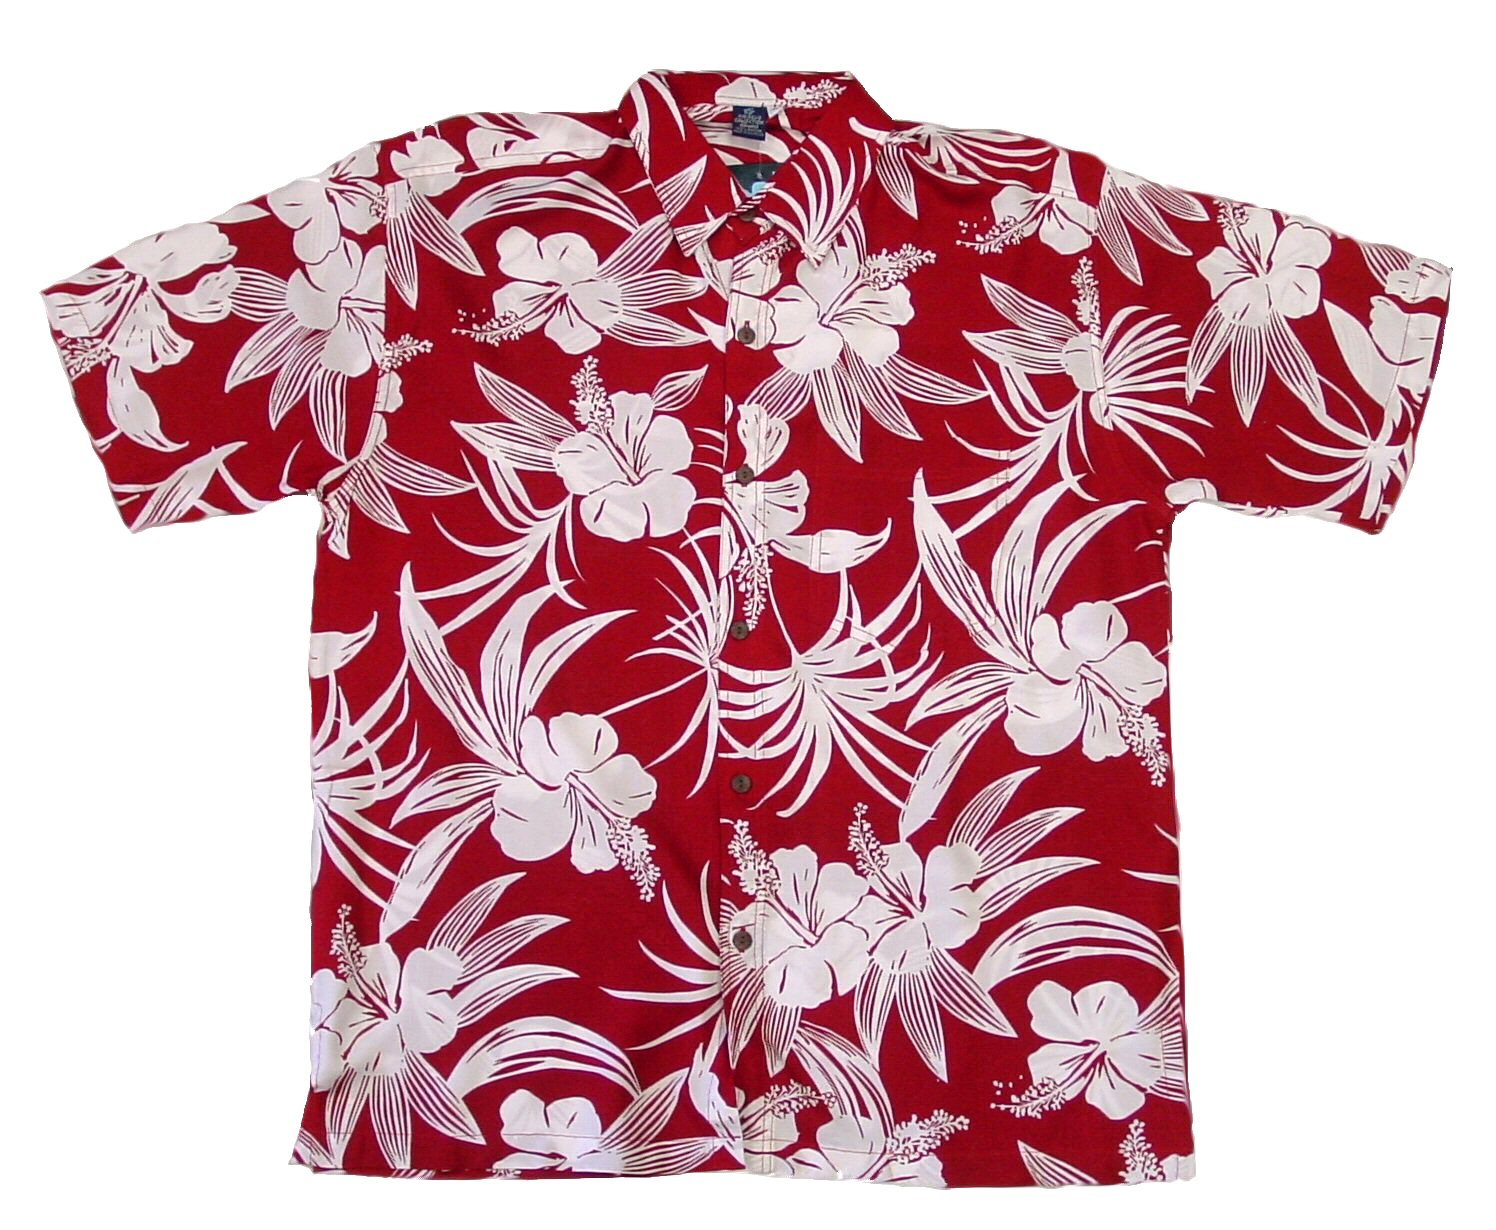 Hawaiian shirts in Chadstone? : r/melbourne